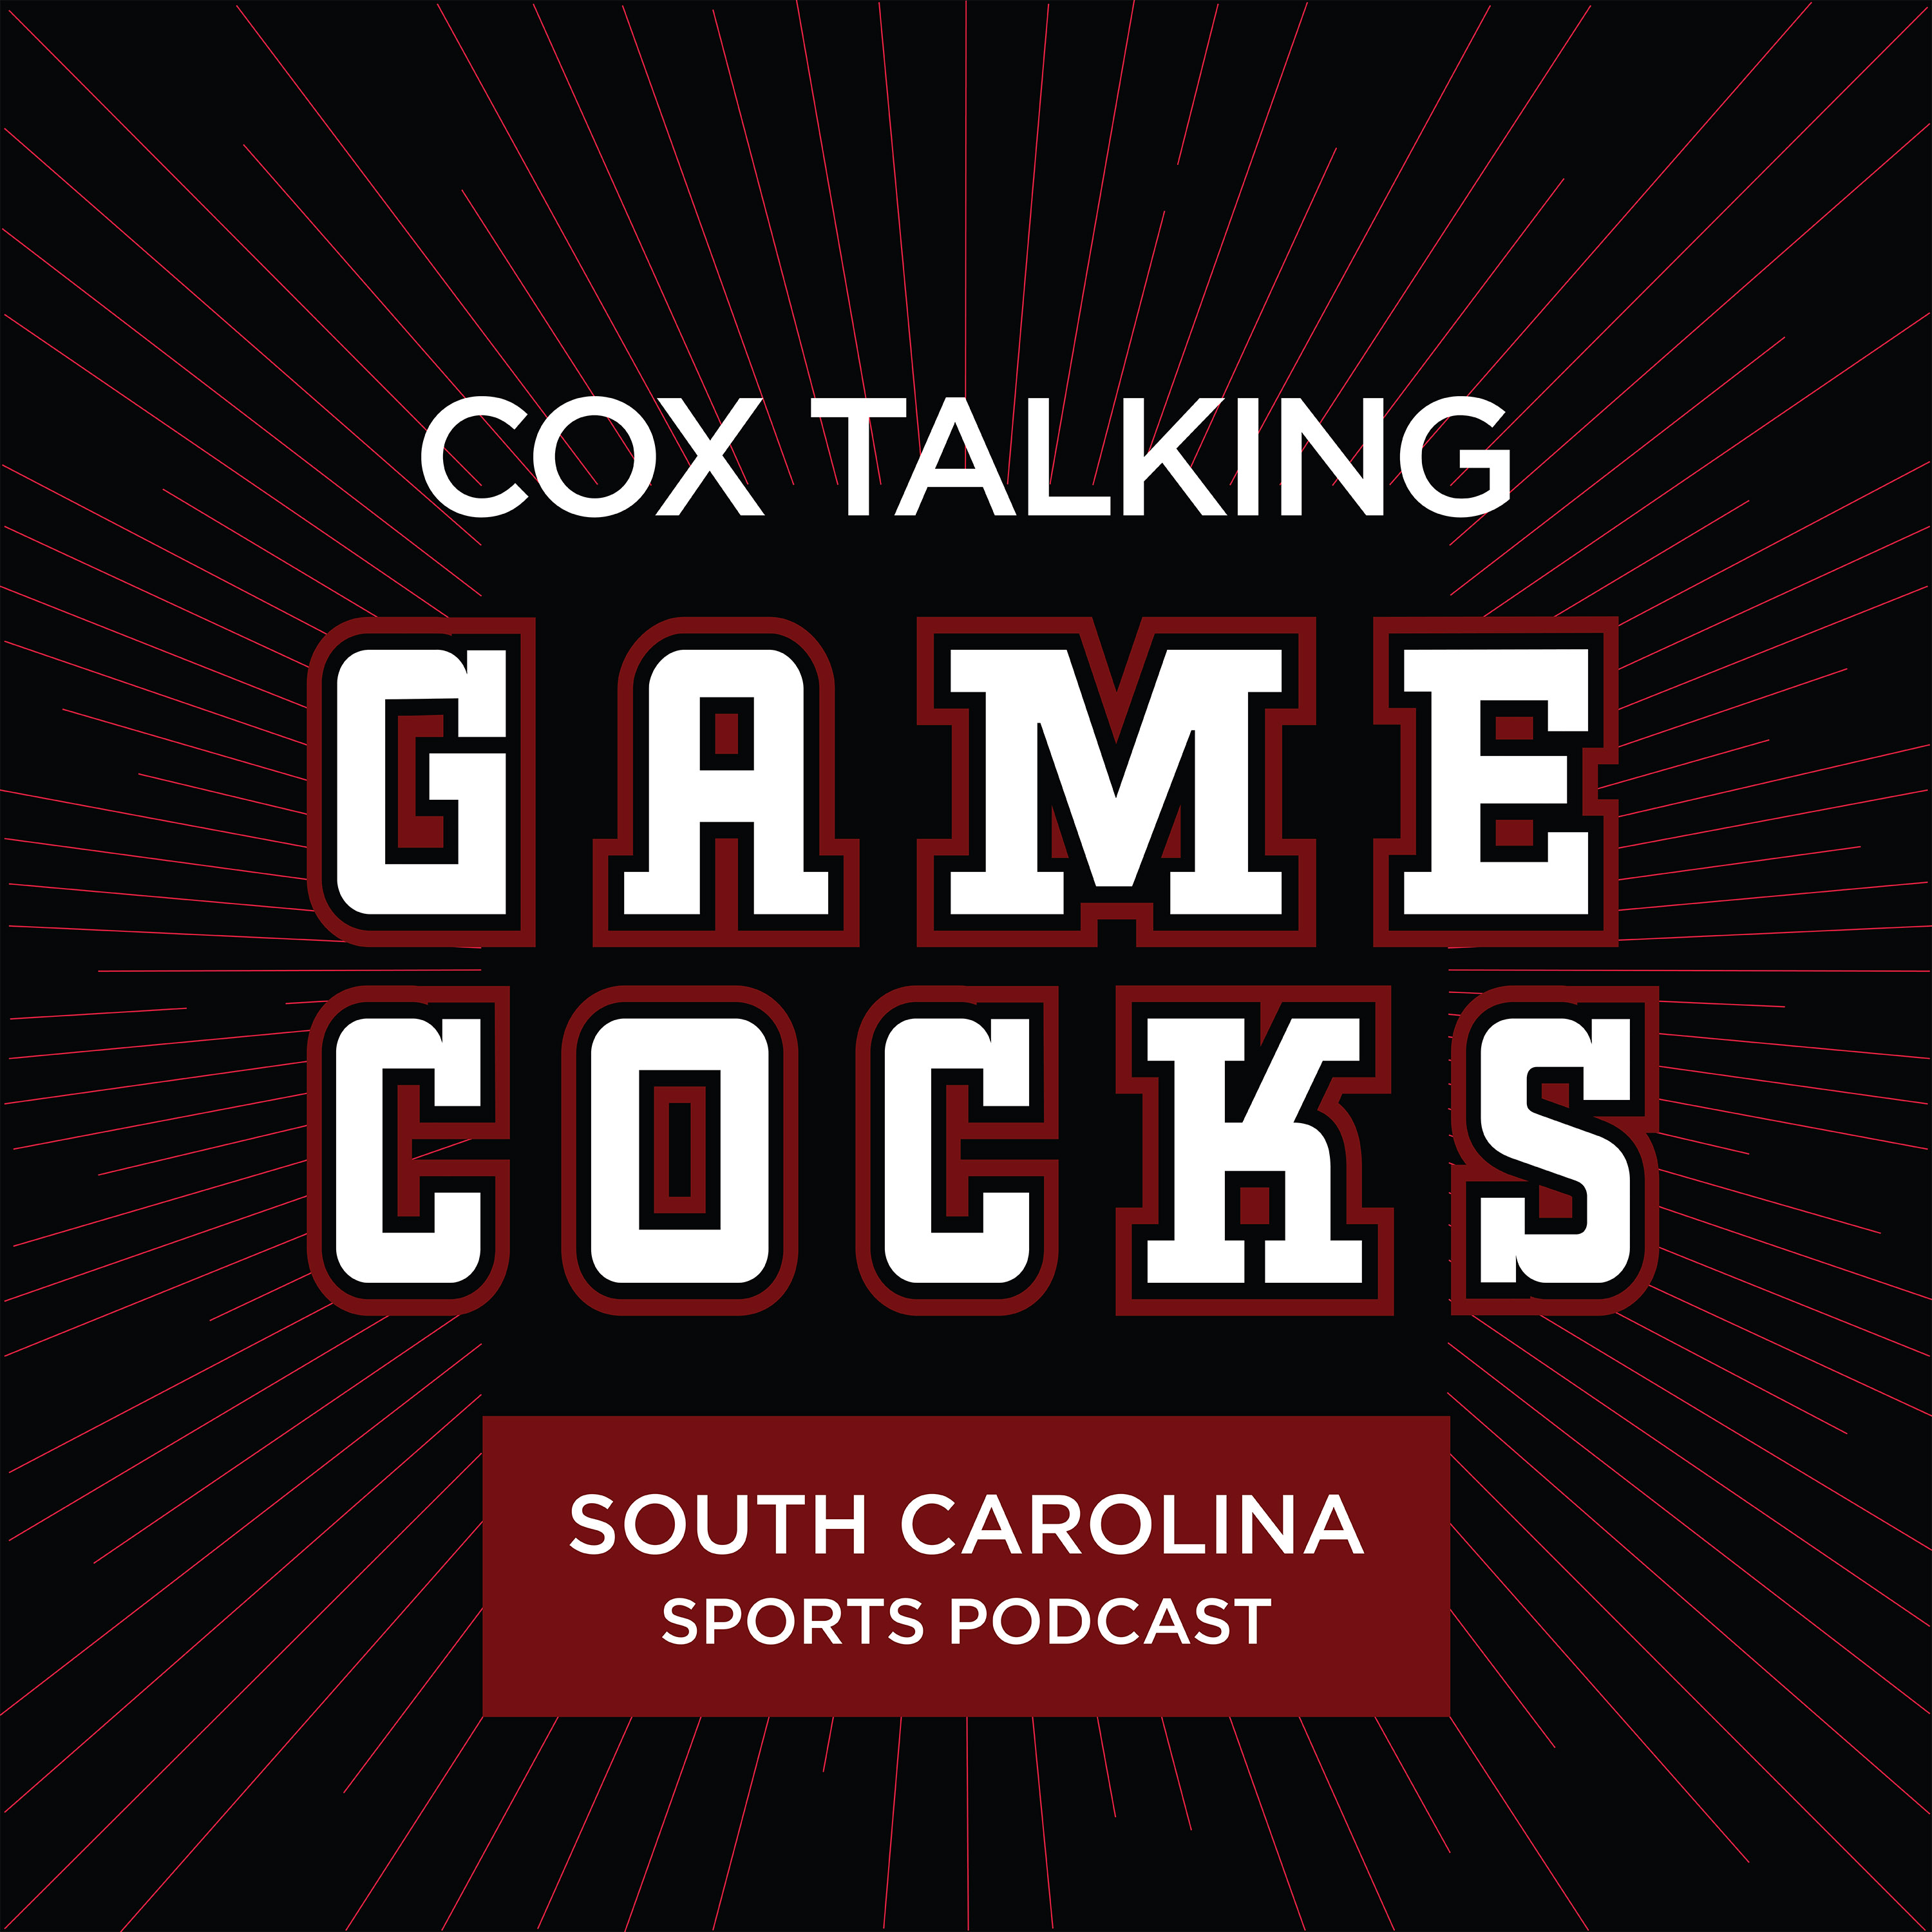 South Carolina Football Takes On Mizzou: Analysis, Storylines + USC Athletics Weekly Review